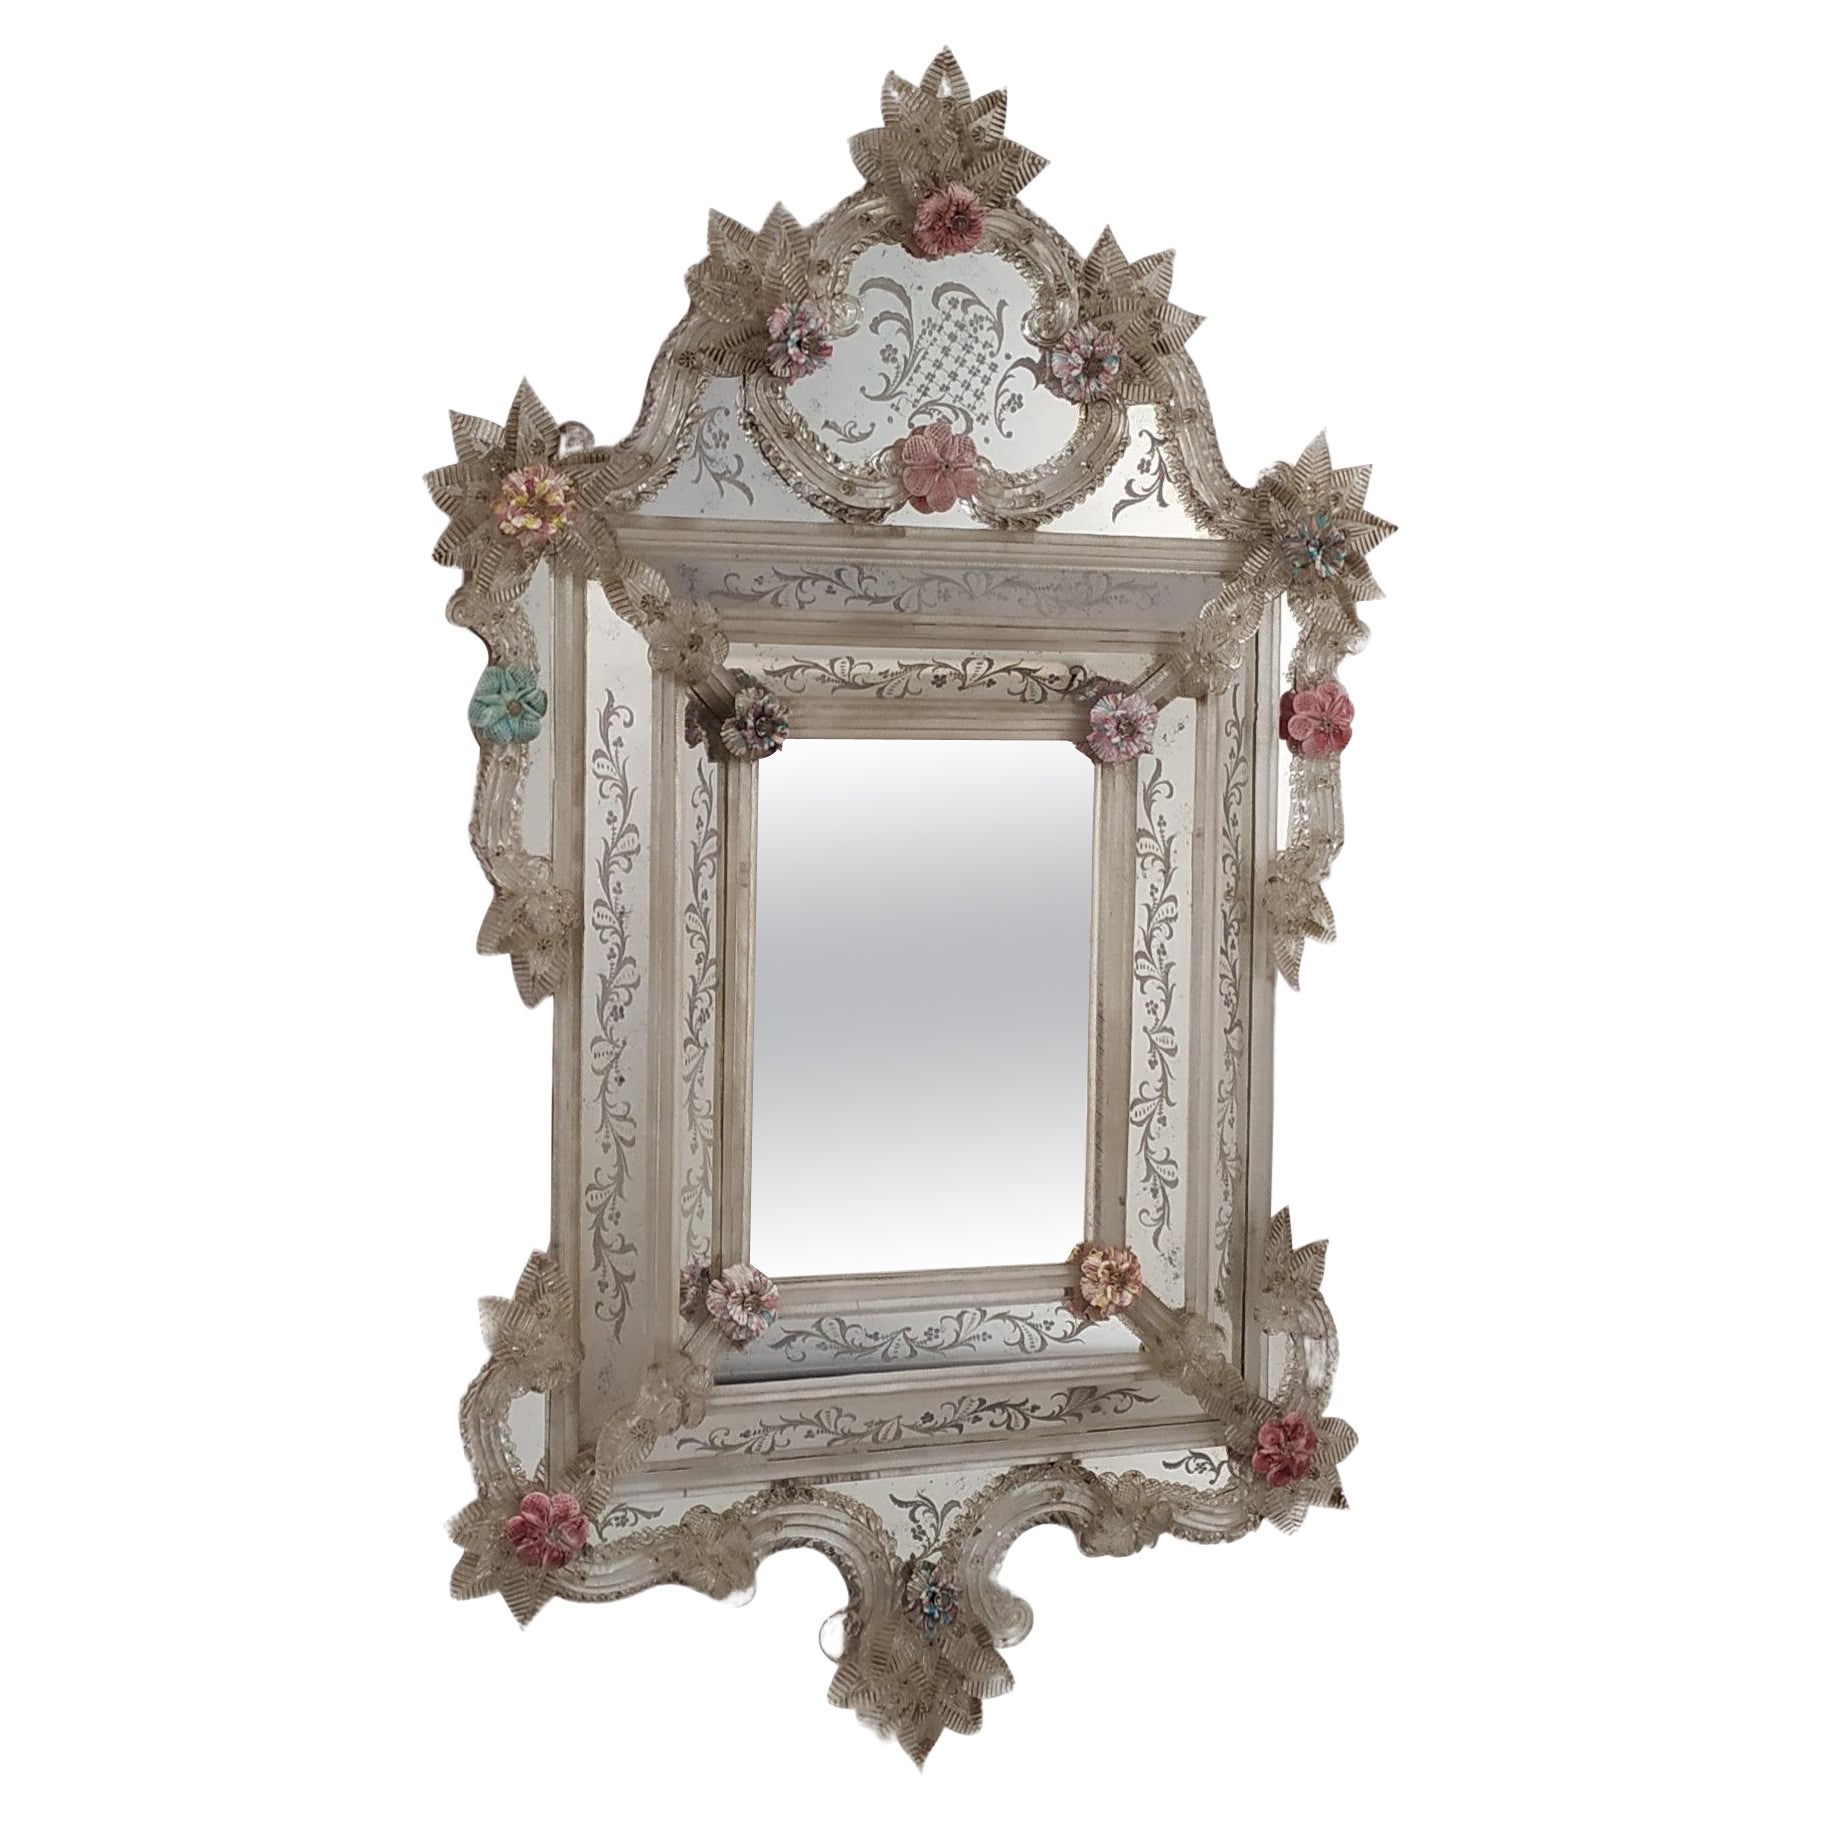  "Laguna" Reproduction of Antique Venetian Mirror by Fratelli Tosi Murano